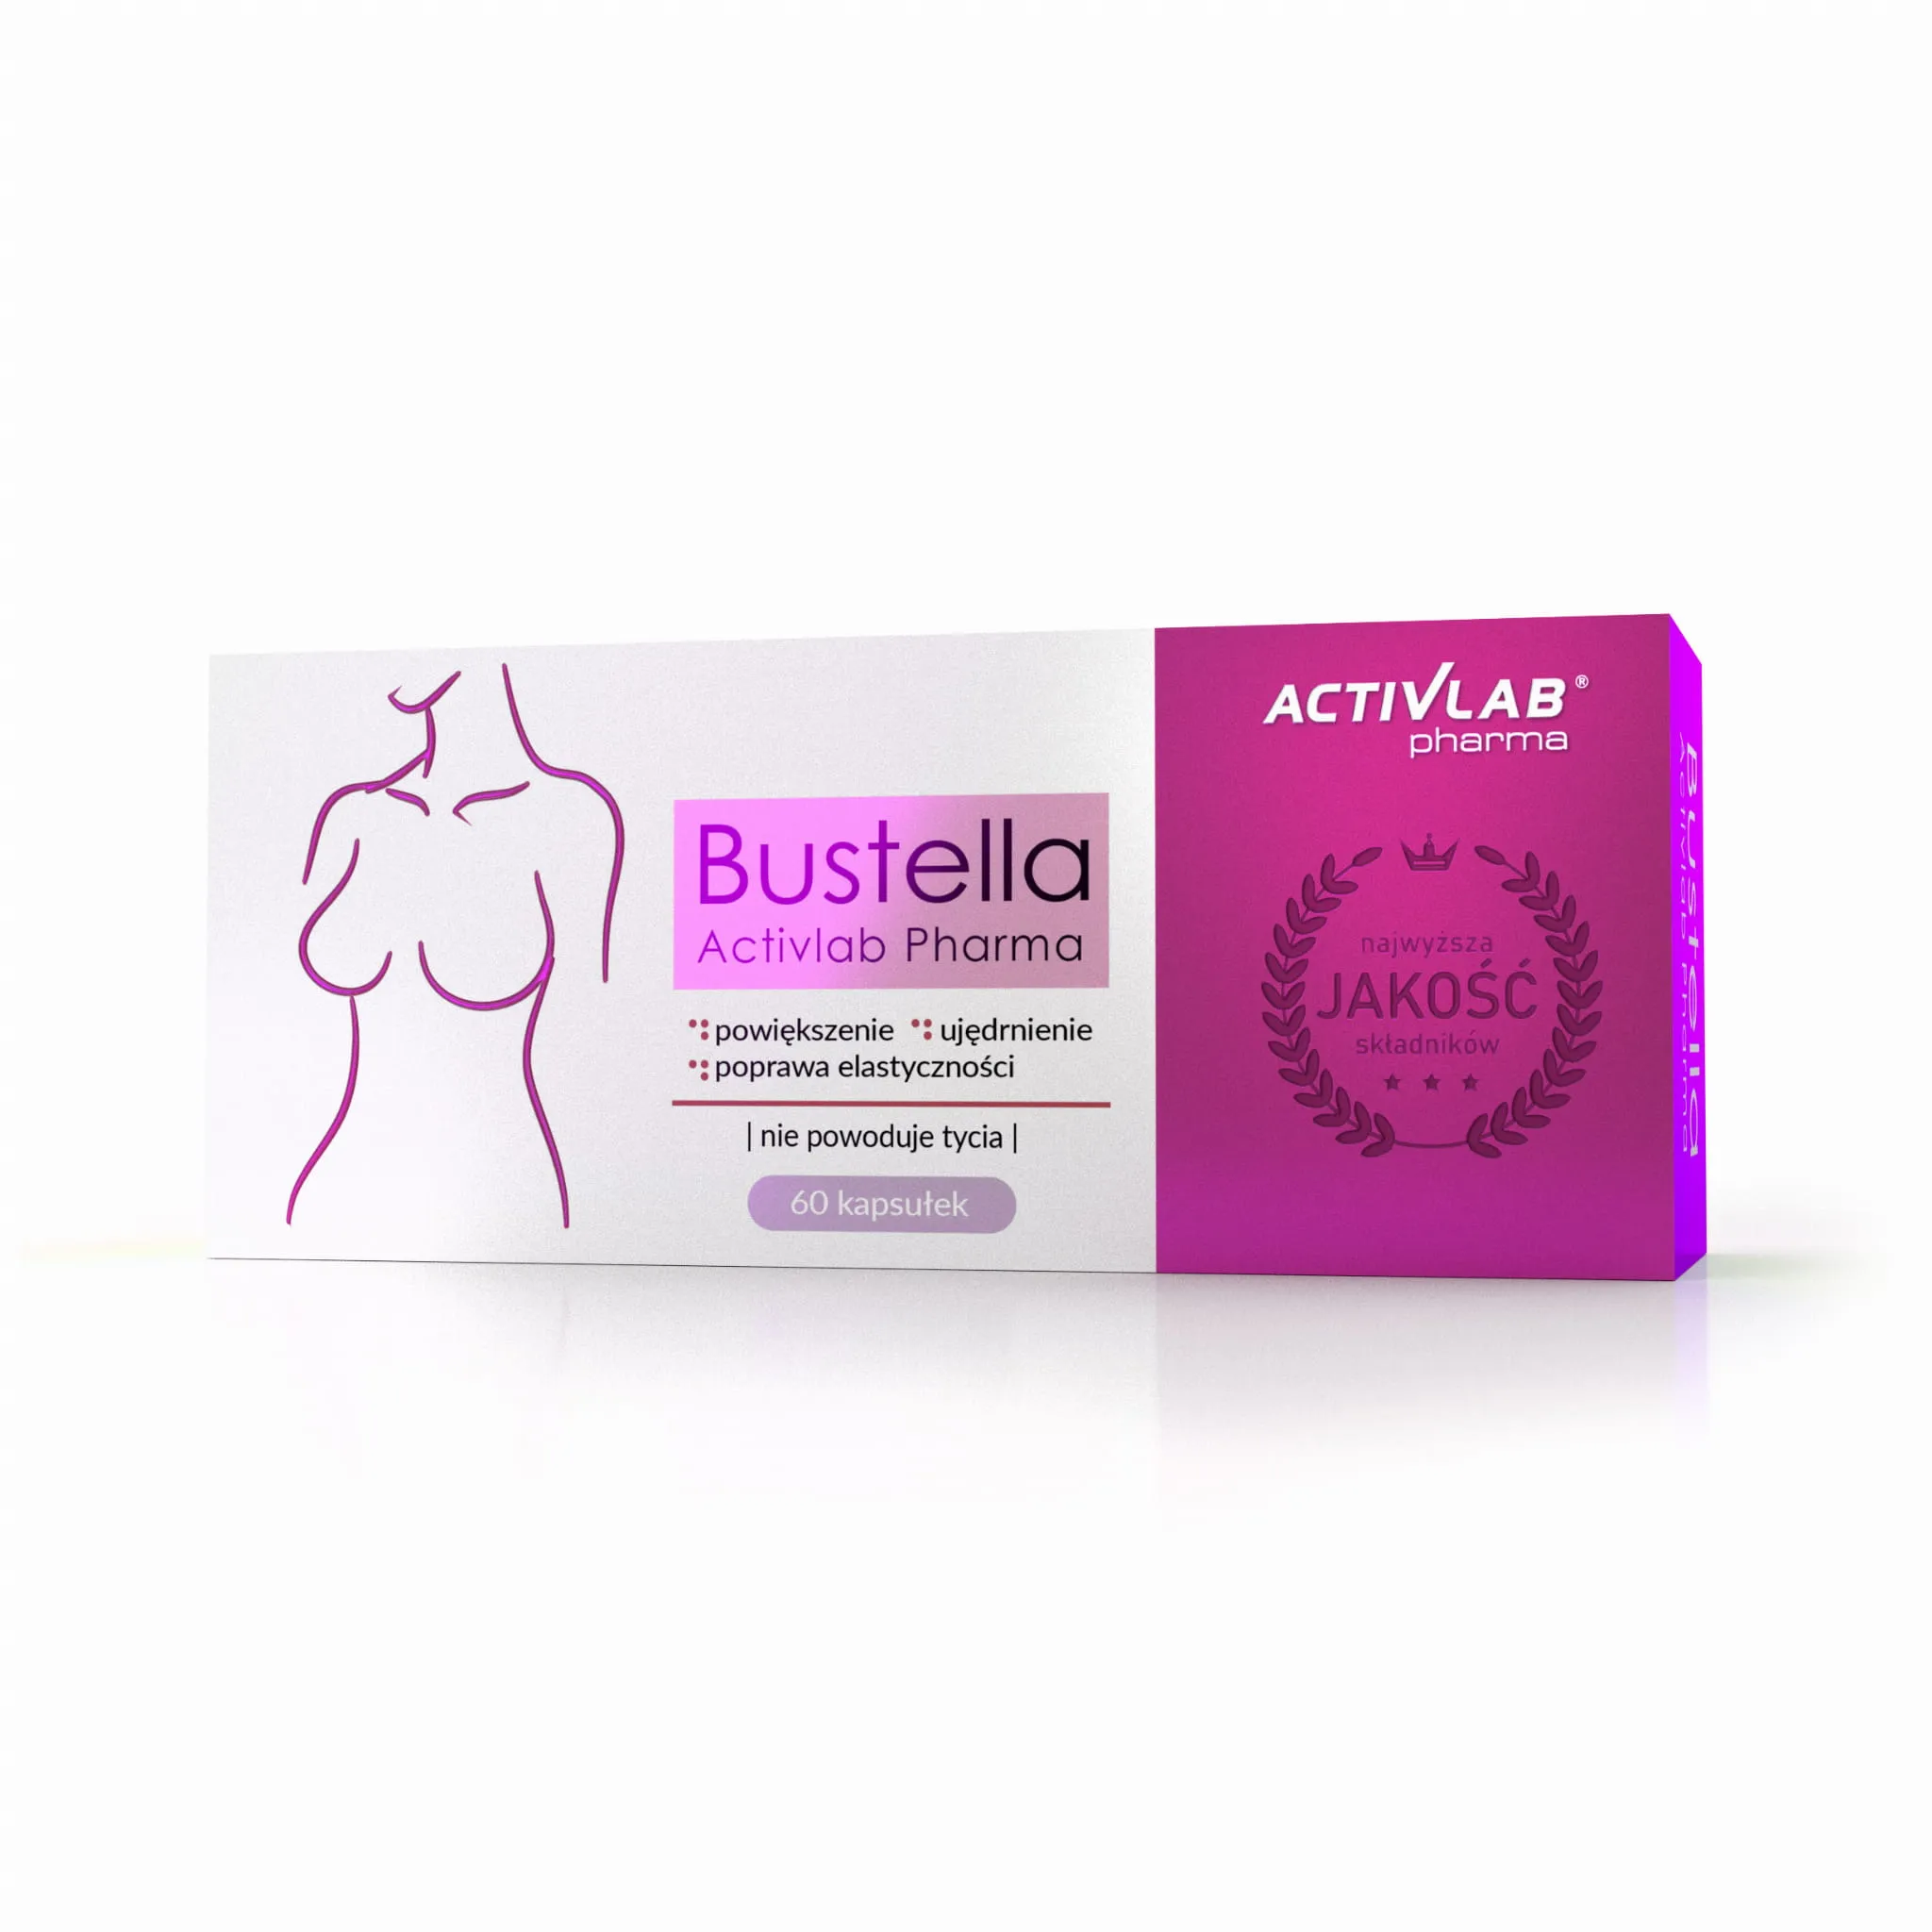 Activlab Pharma Bustella, suplement diety, 60 kapsułek